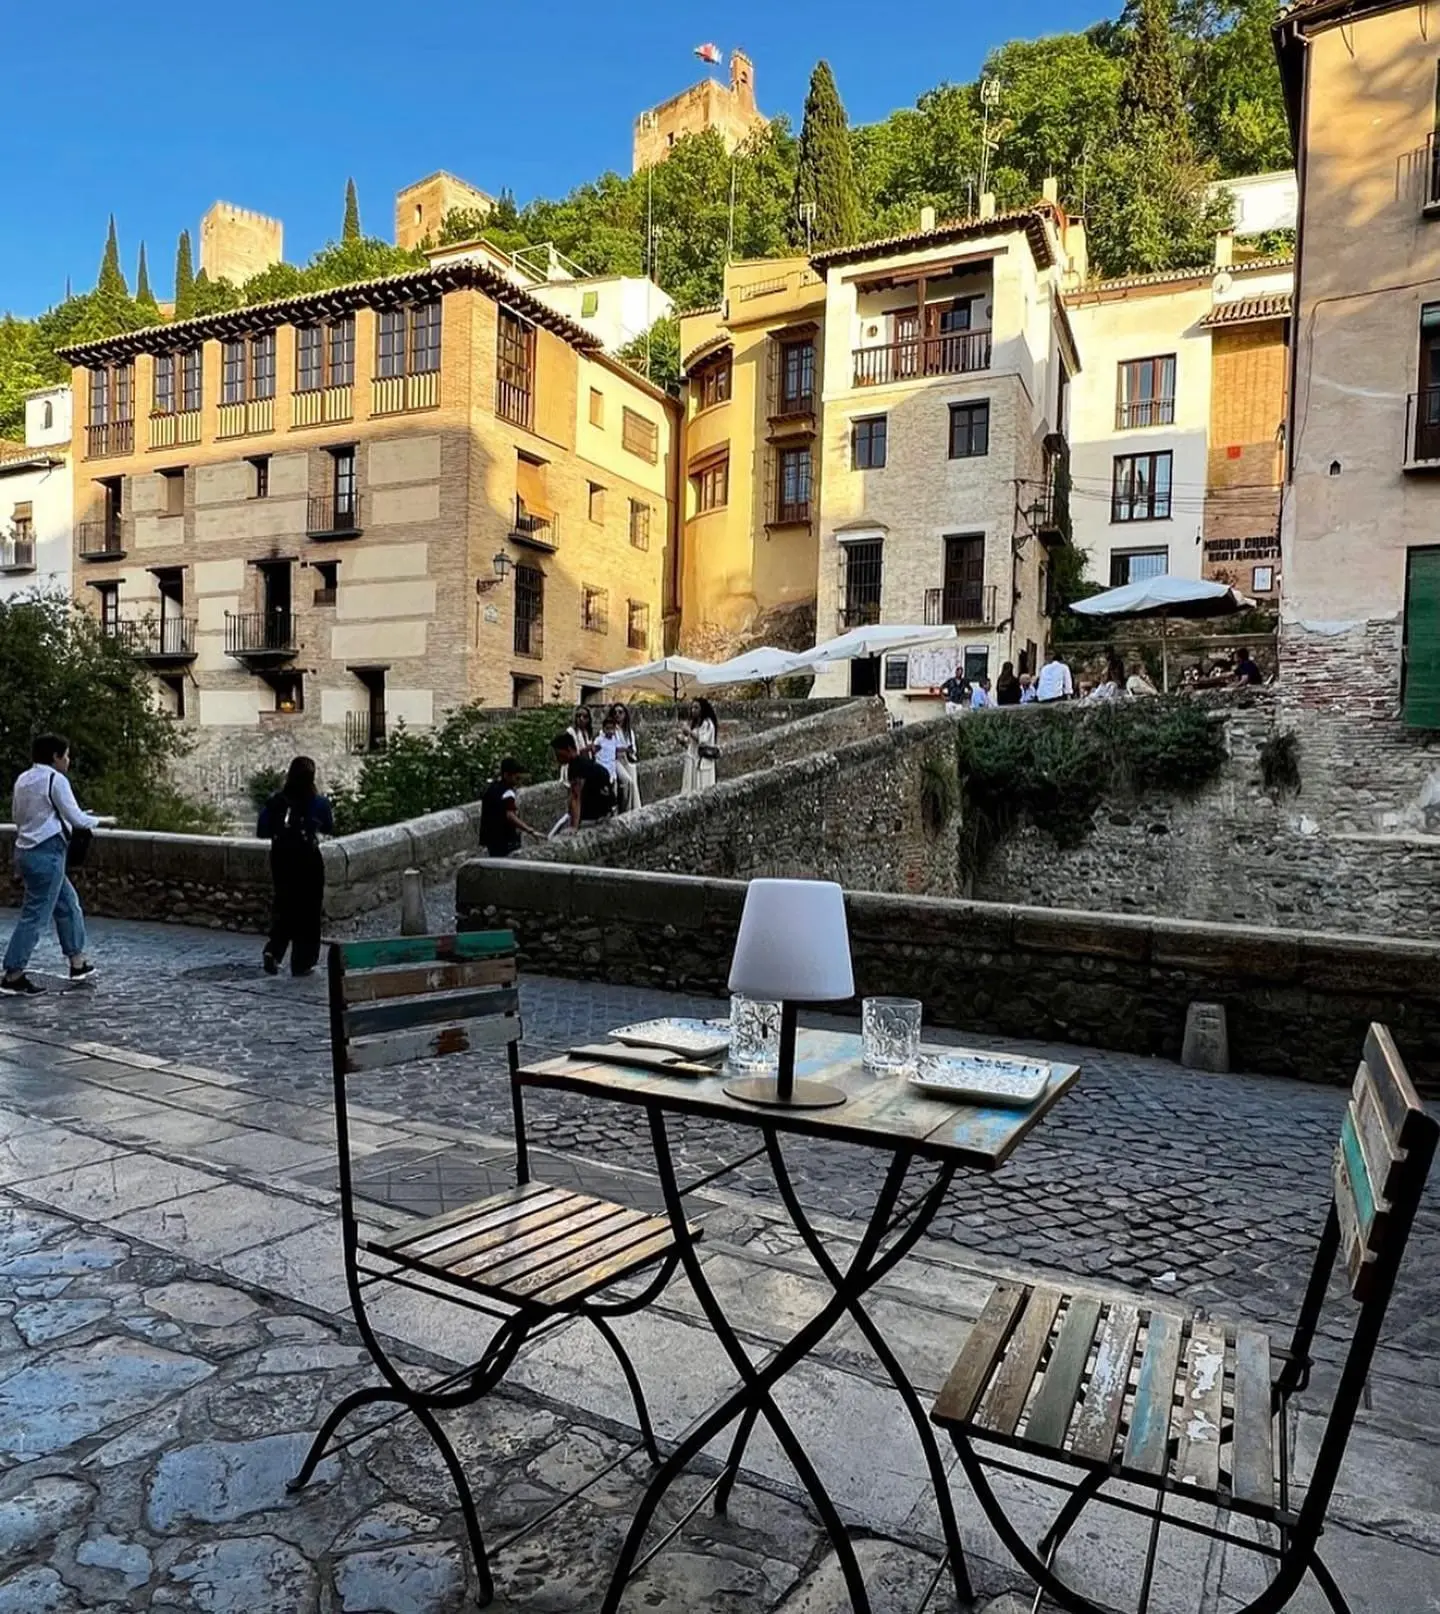 Restaurante Ossobuco located in Paseo de los tristes Granada with view to the Alhambra, italian restaurant city center